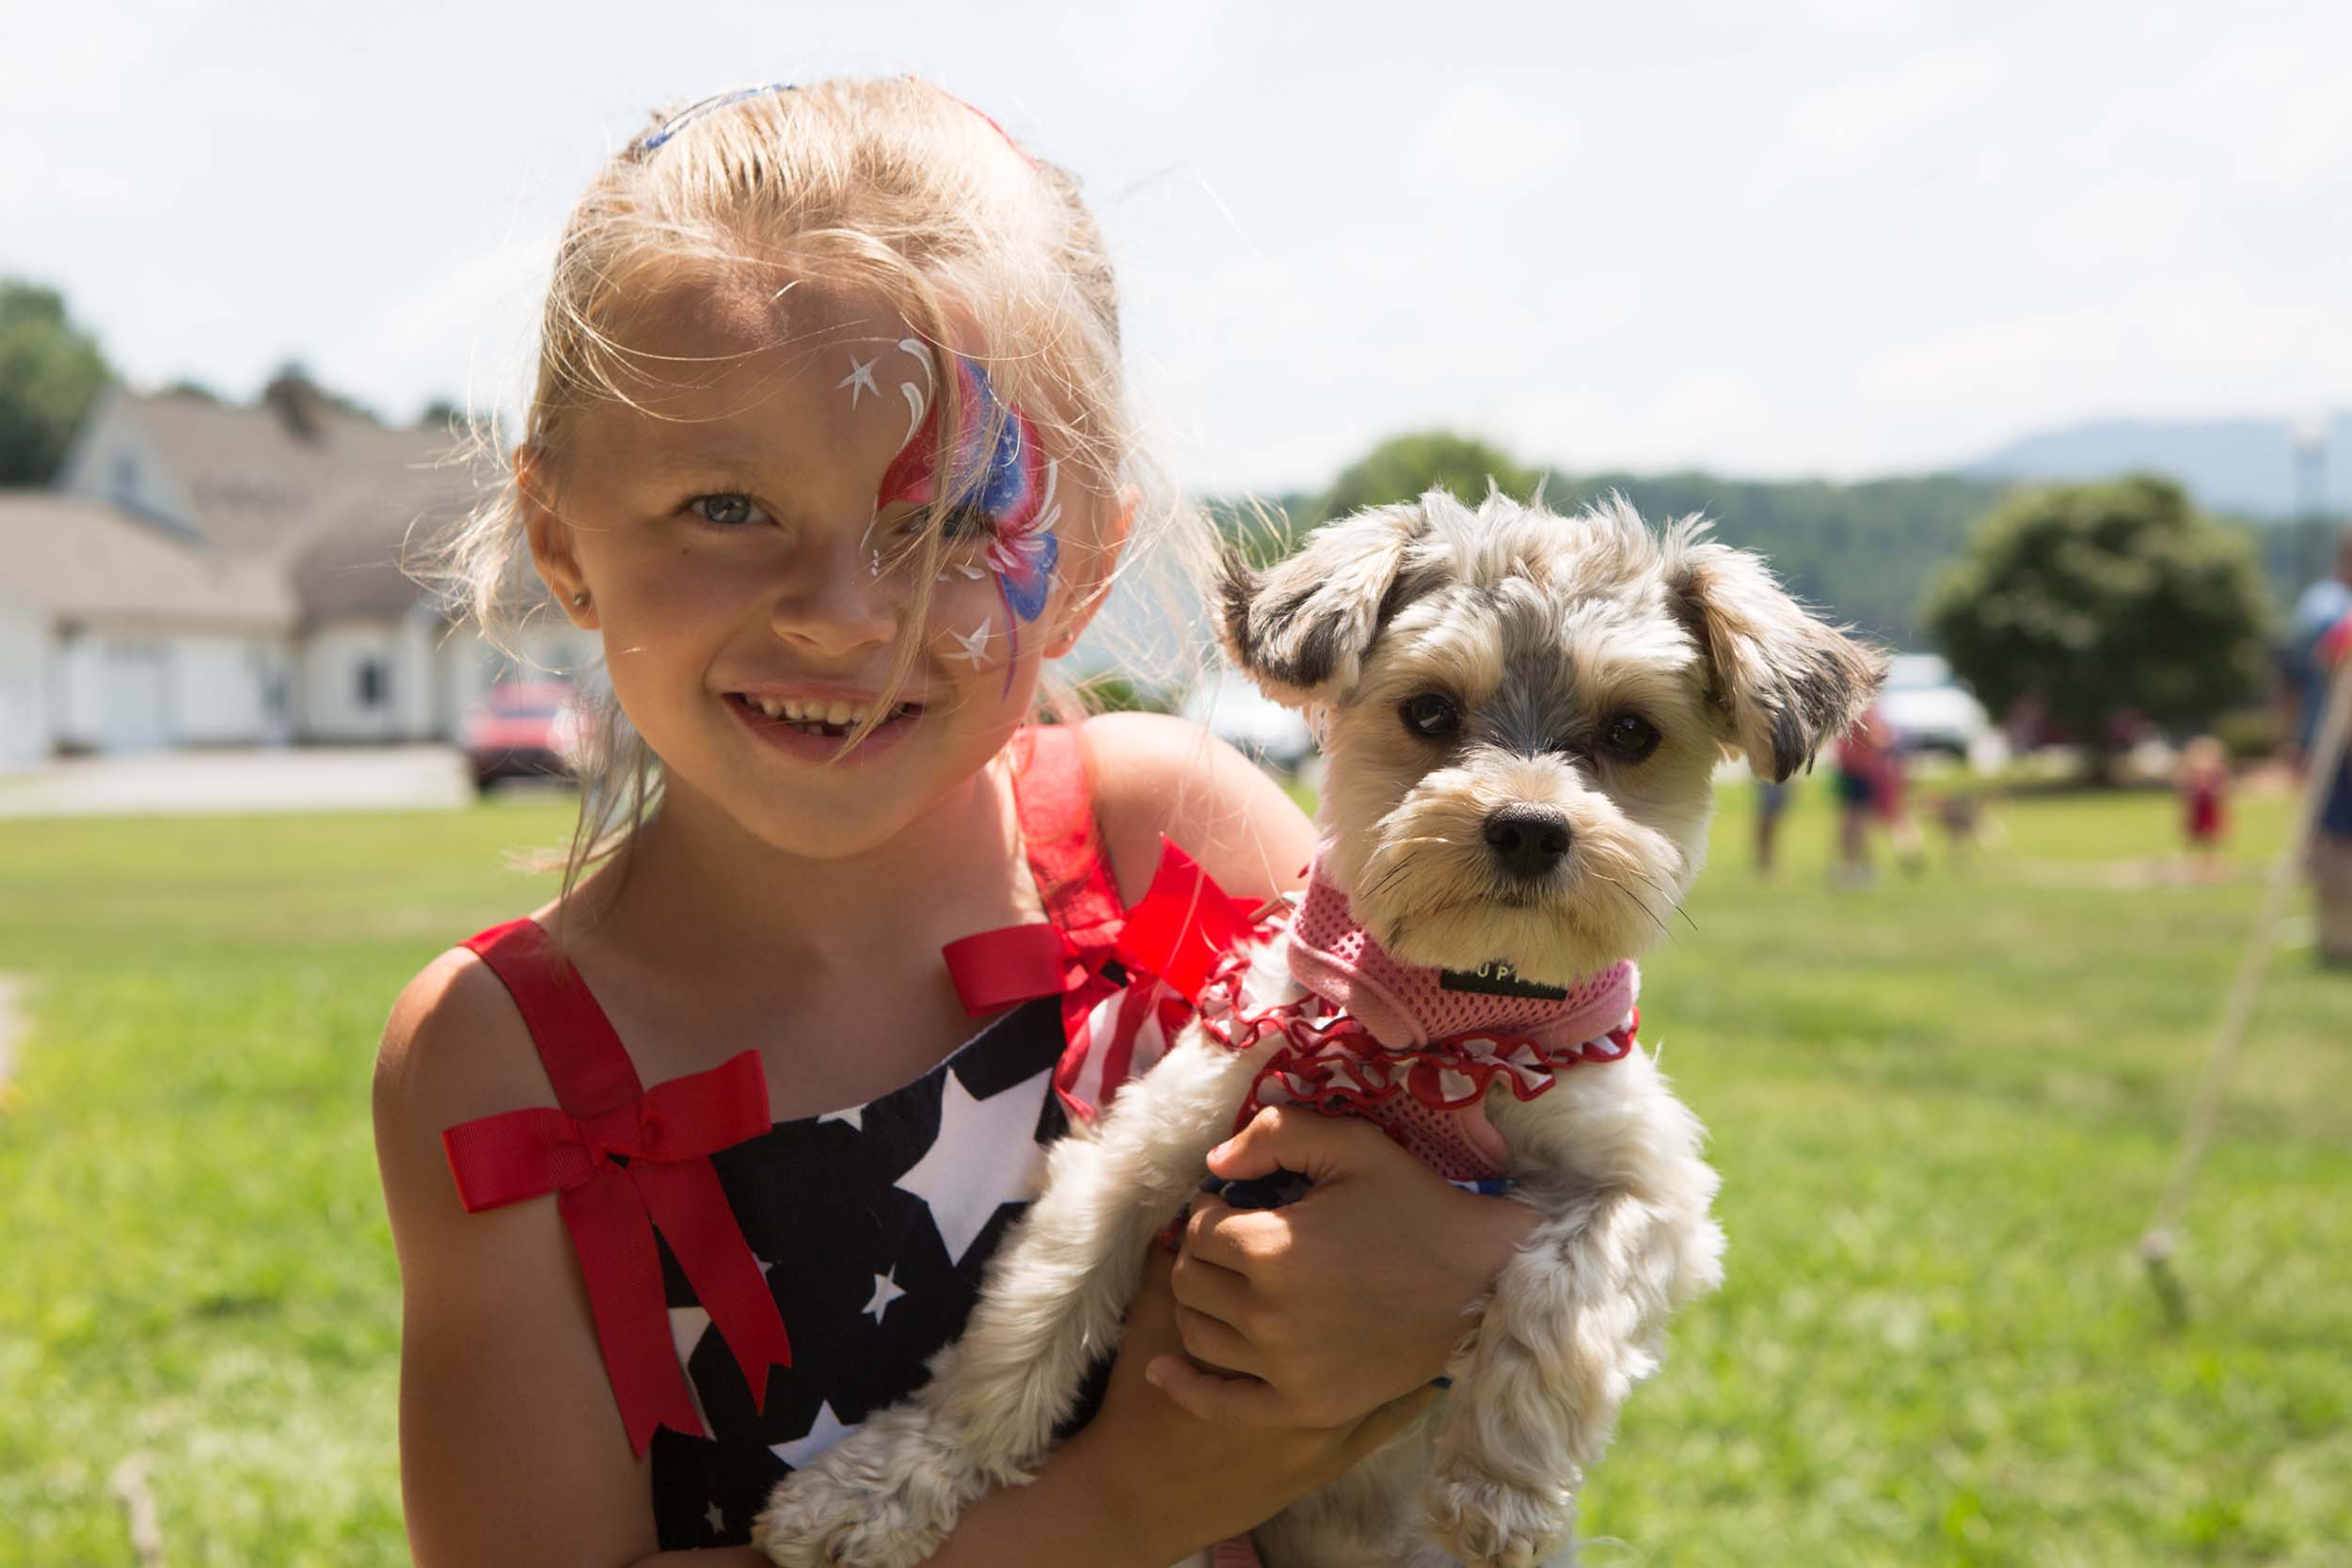 A girl holding a dog enjoys the Independence Day Celebrations at Lake Junaluska